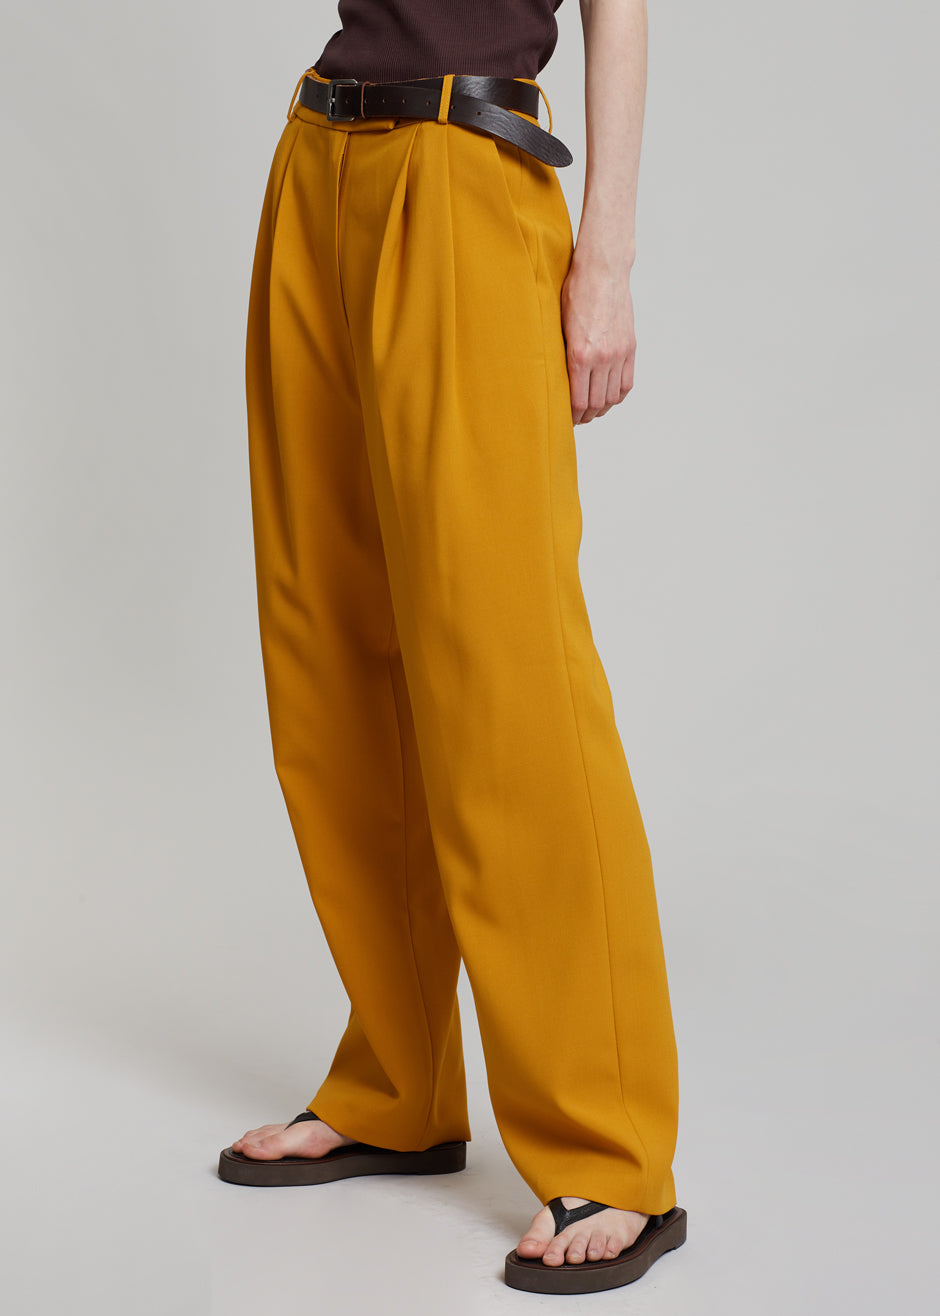 Bea Suit Pants - Mustard - 6